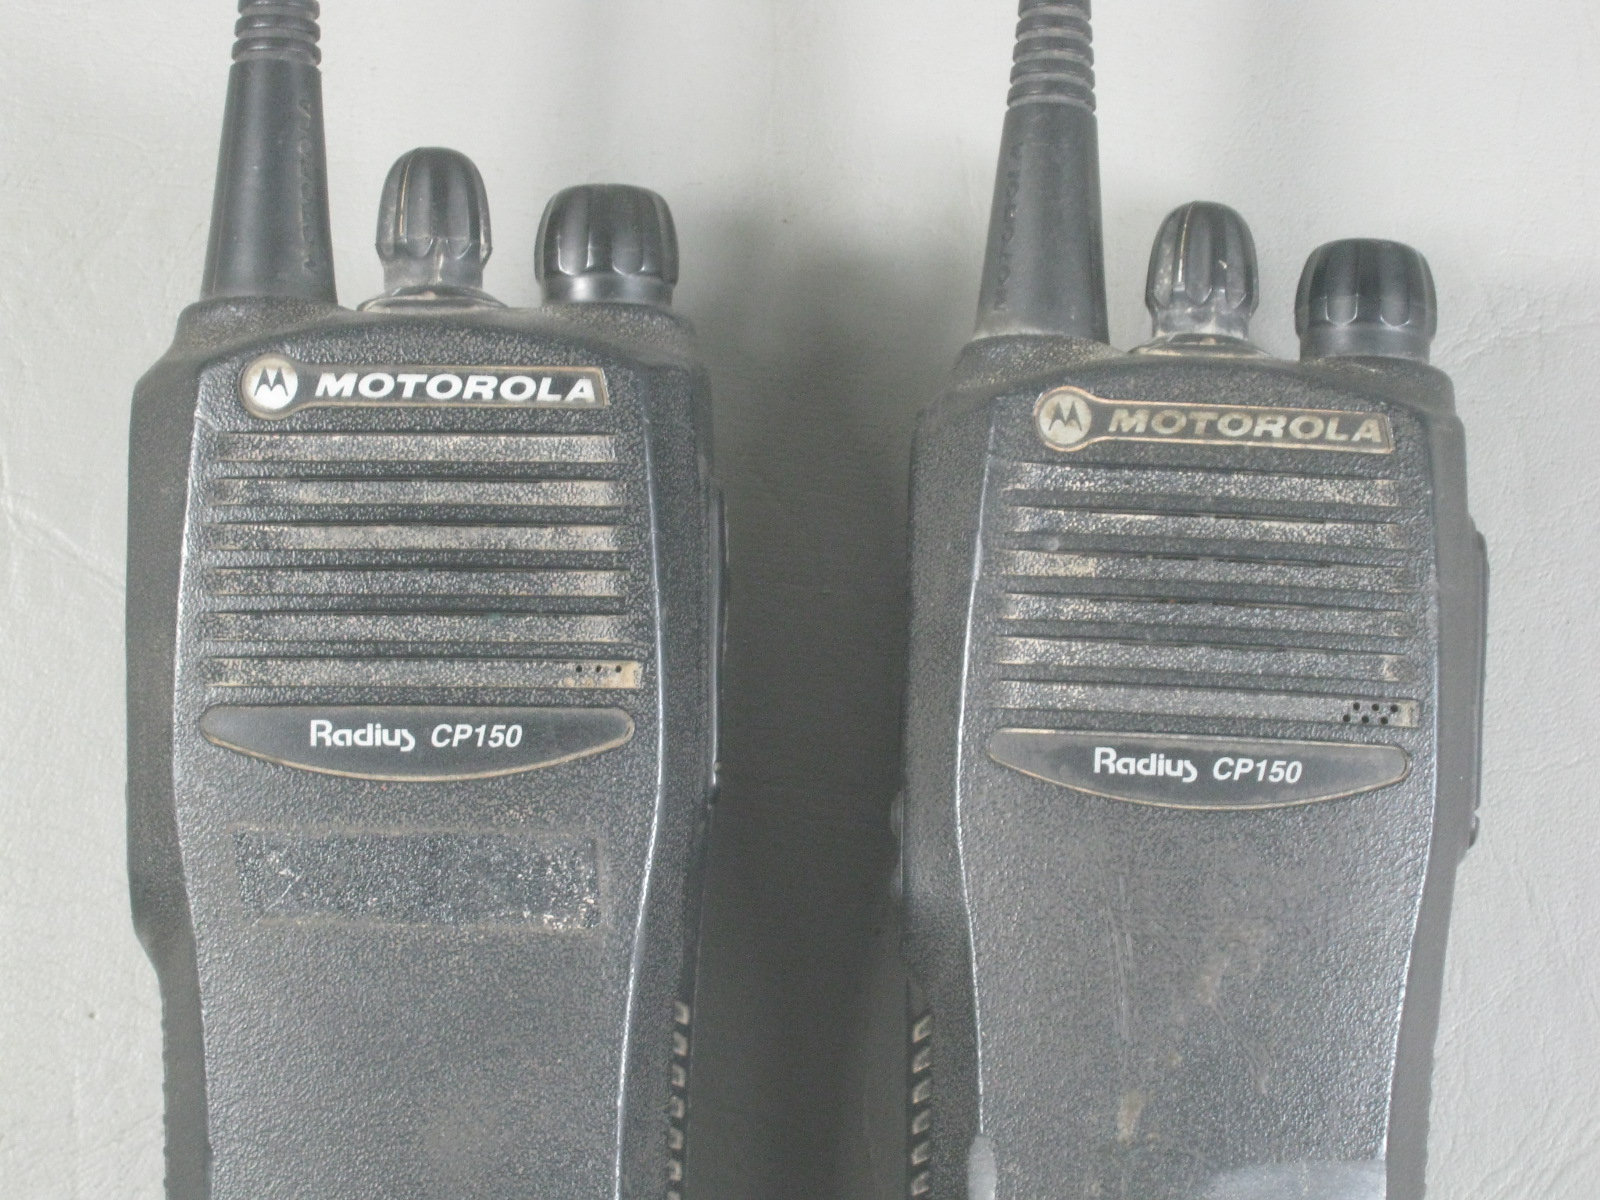 2 Motorola Radius CP150 UHF Narrow Band 2-Way Commercial Radios Tested + Working 1